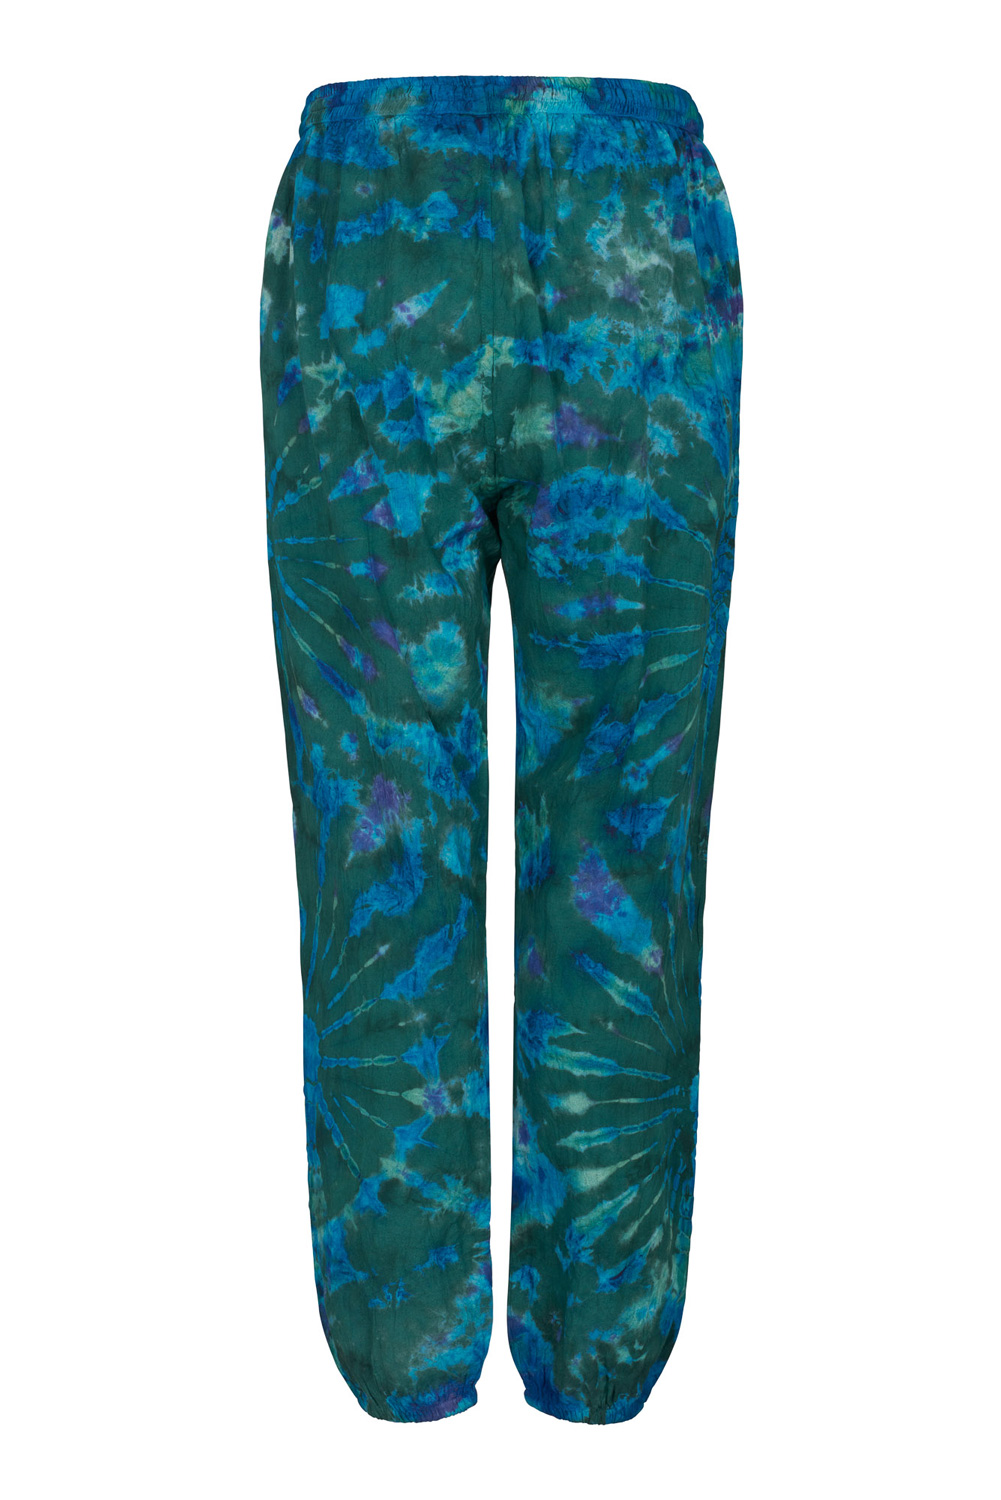 Wicked Dragon Clothing - Long hippie tie dye trousers